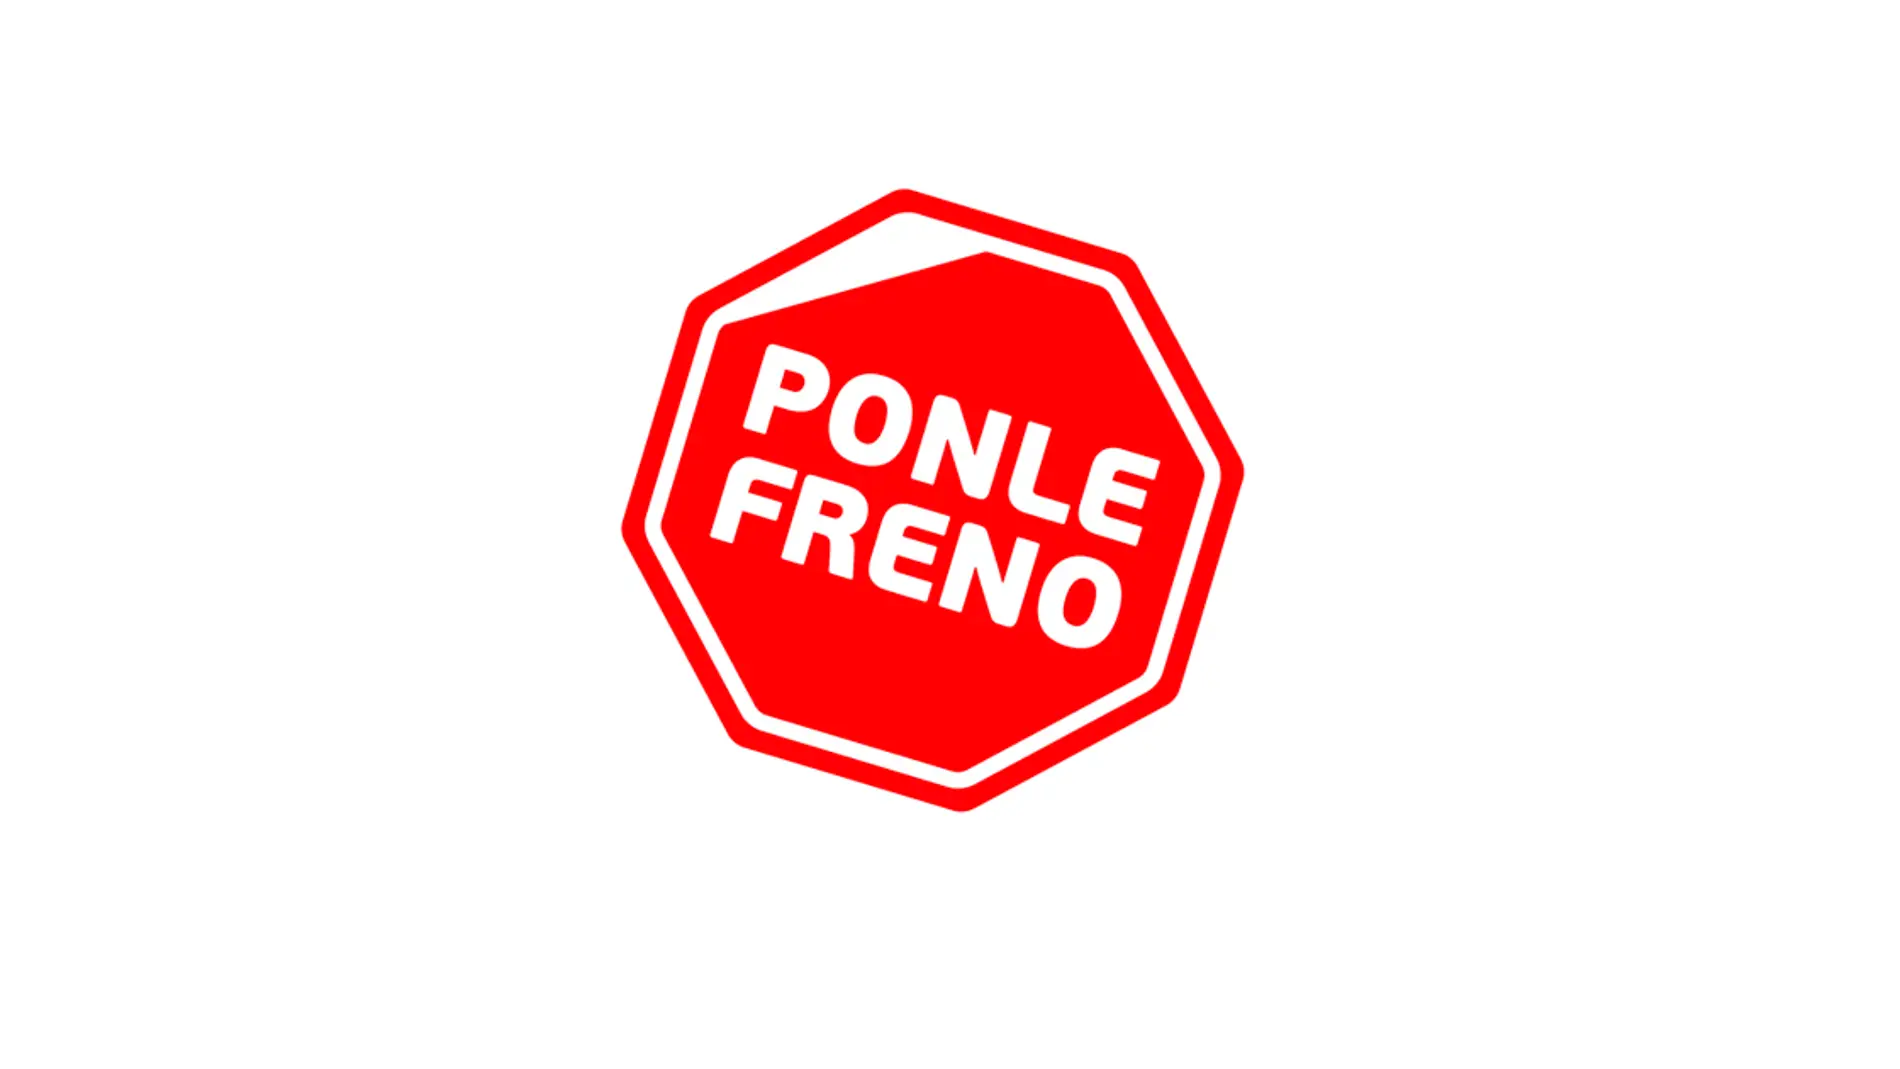 Logo Ponle Freno